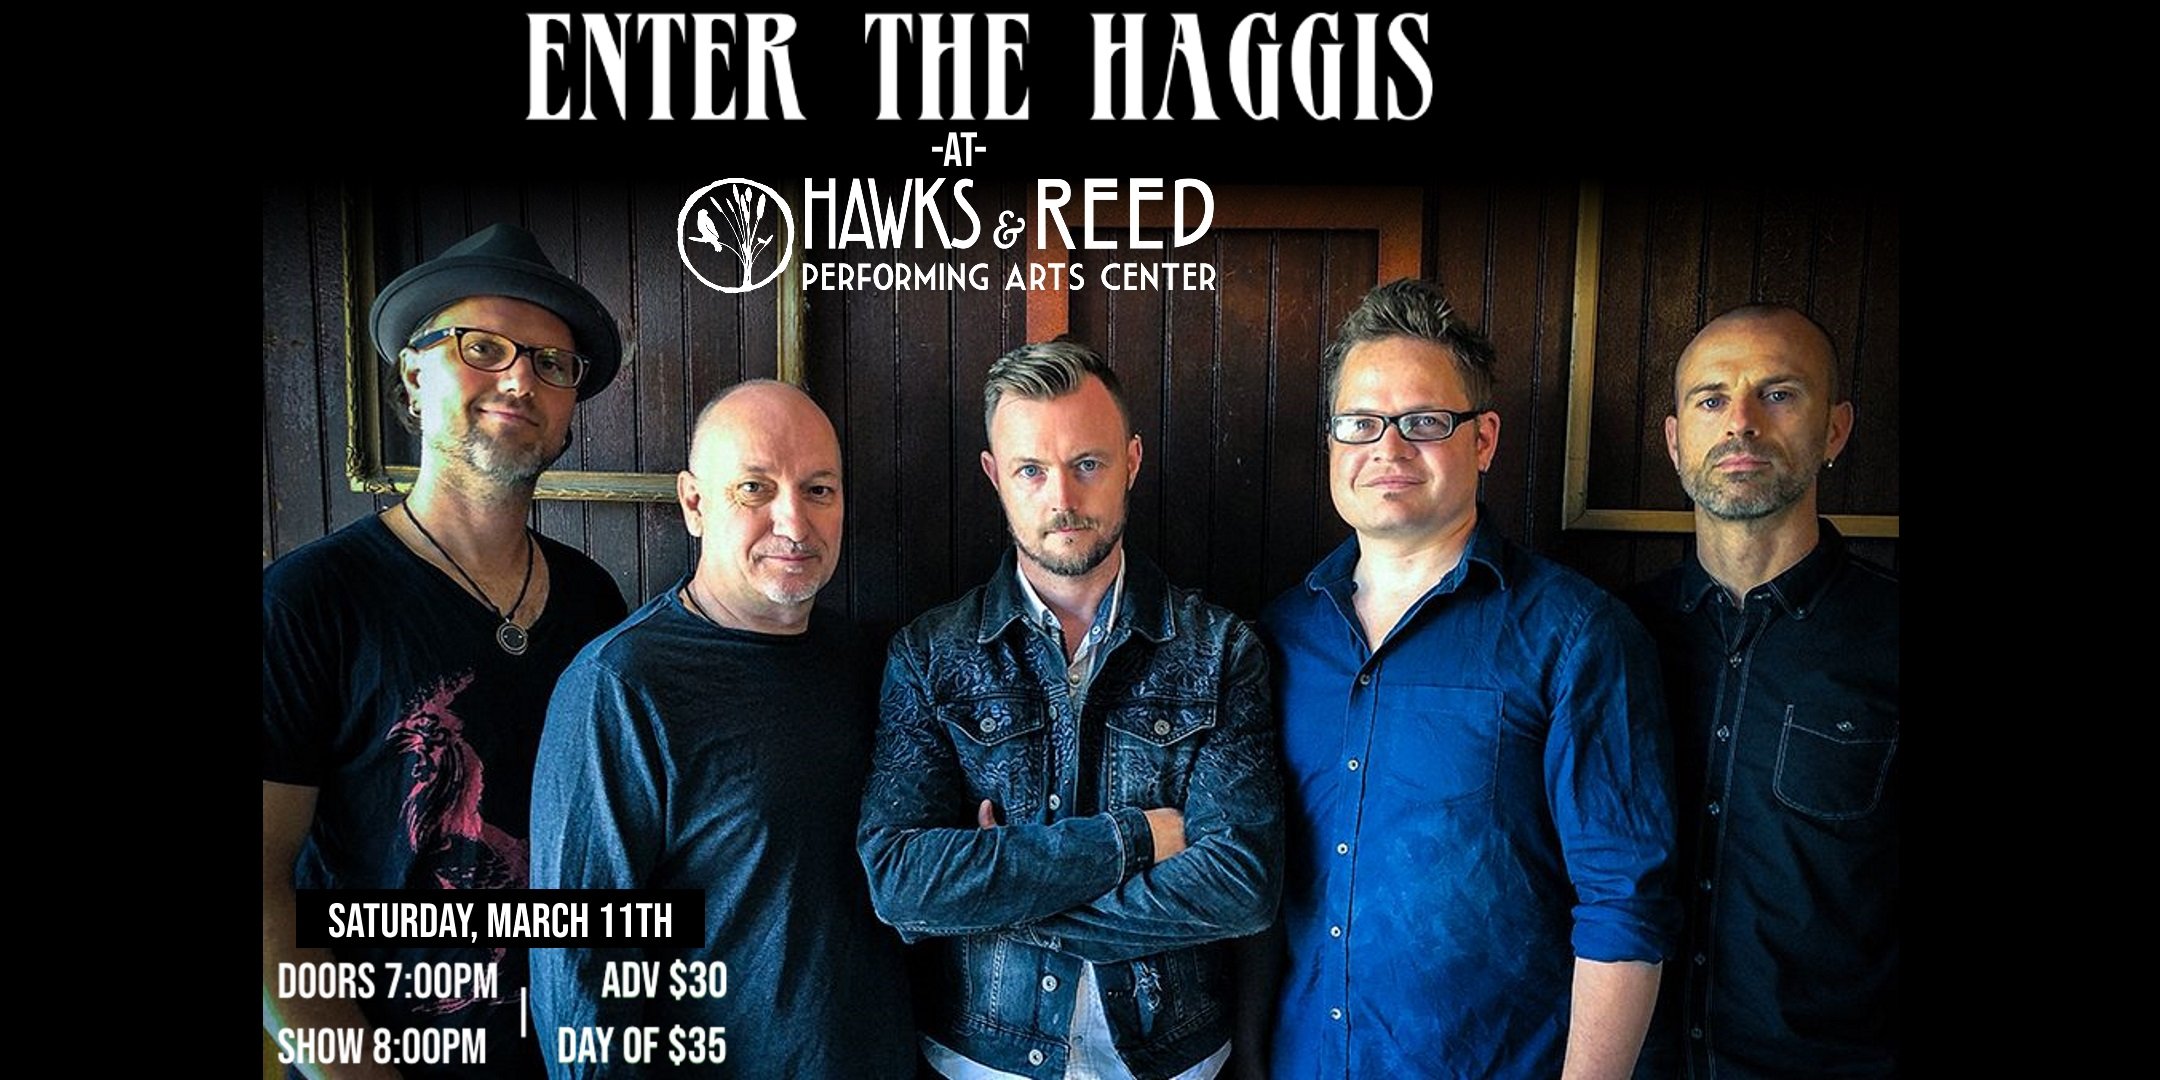 Enter the Haggis at Hawks & Reed